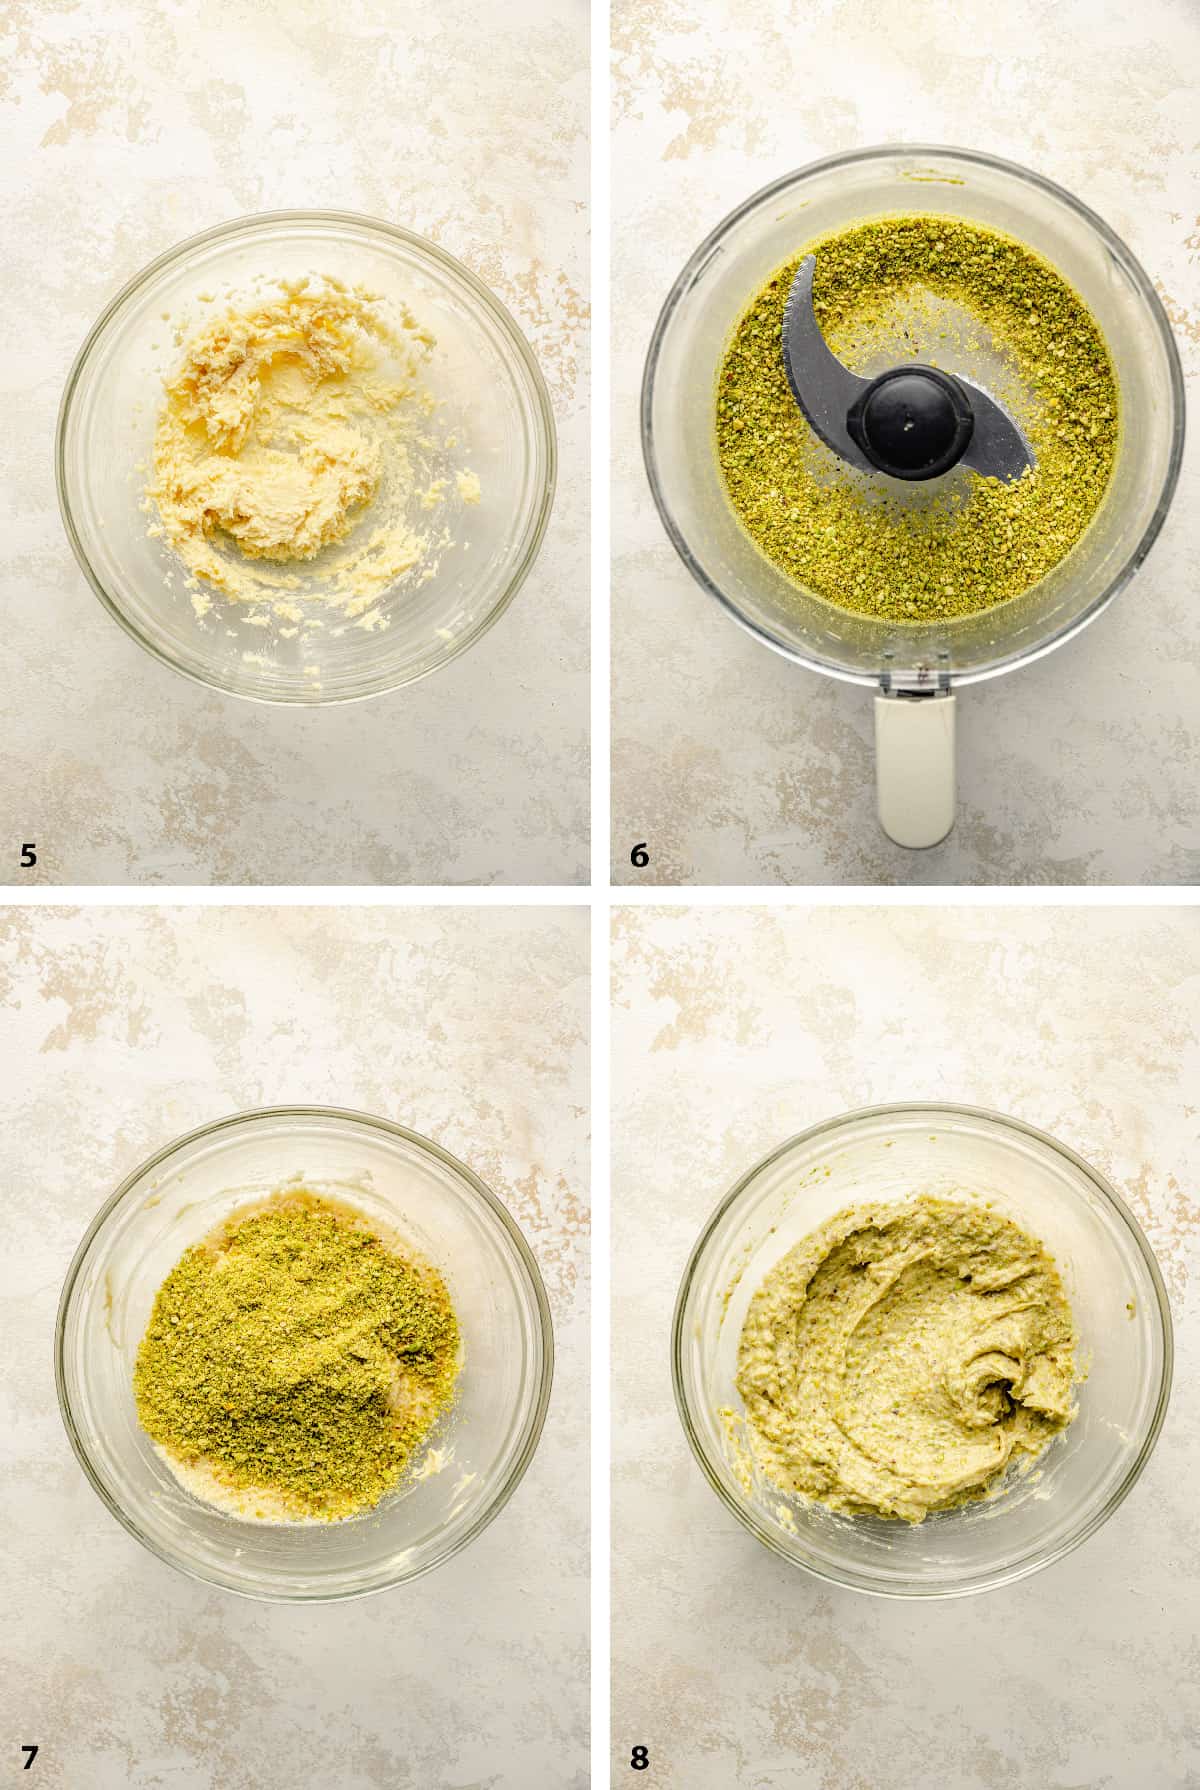 Process of creating the pistachio frangipane.